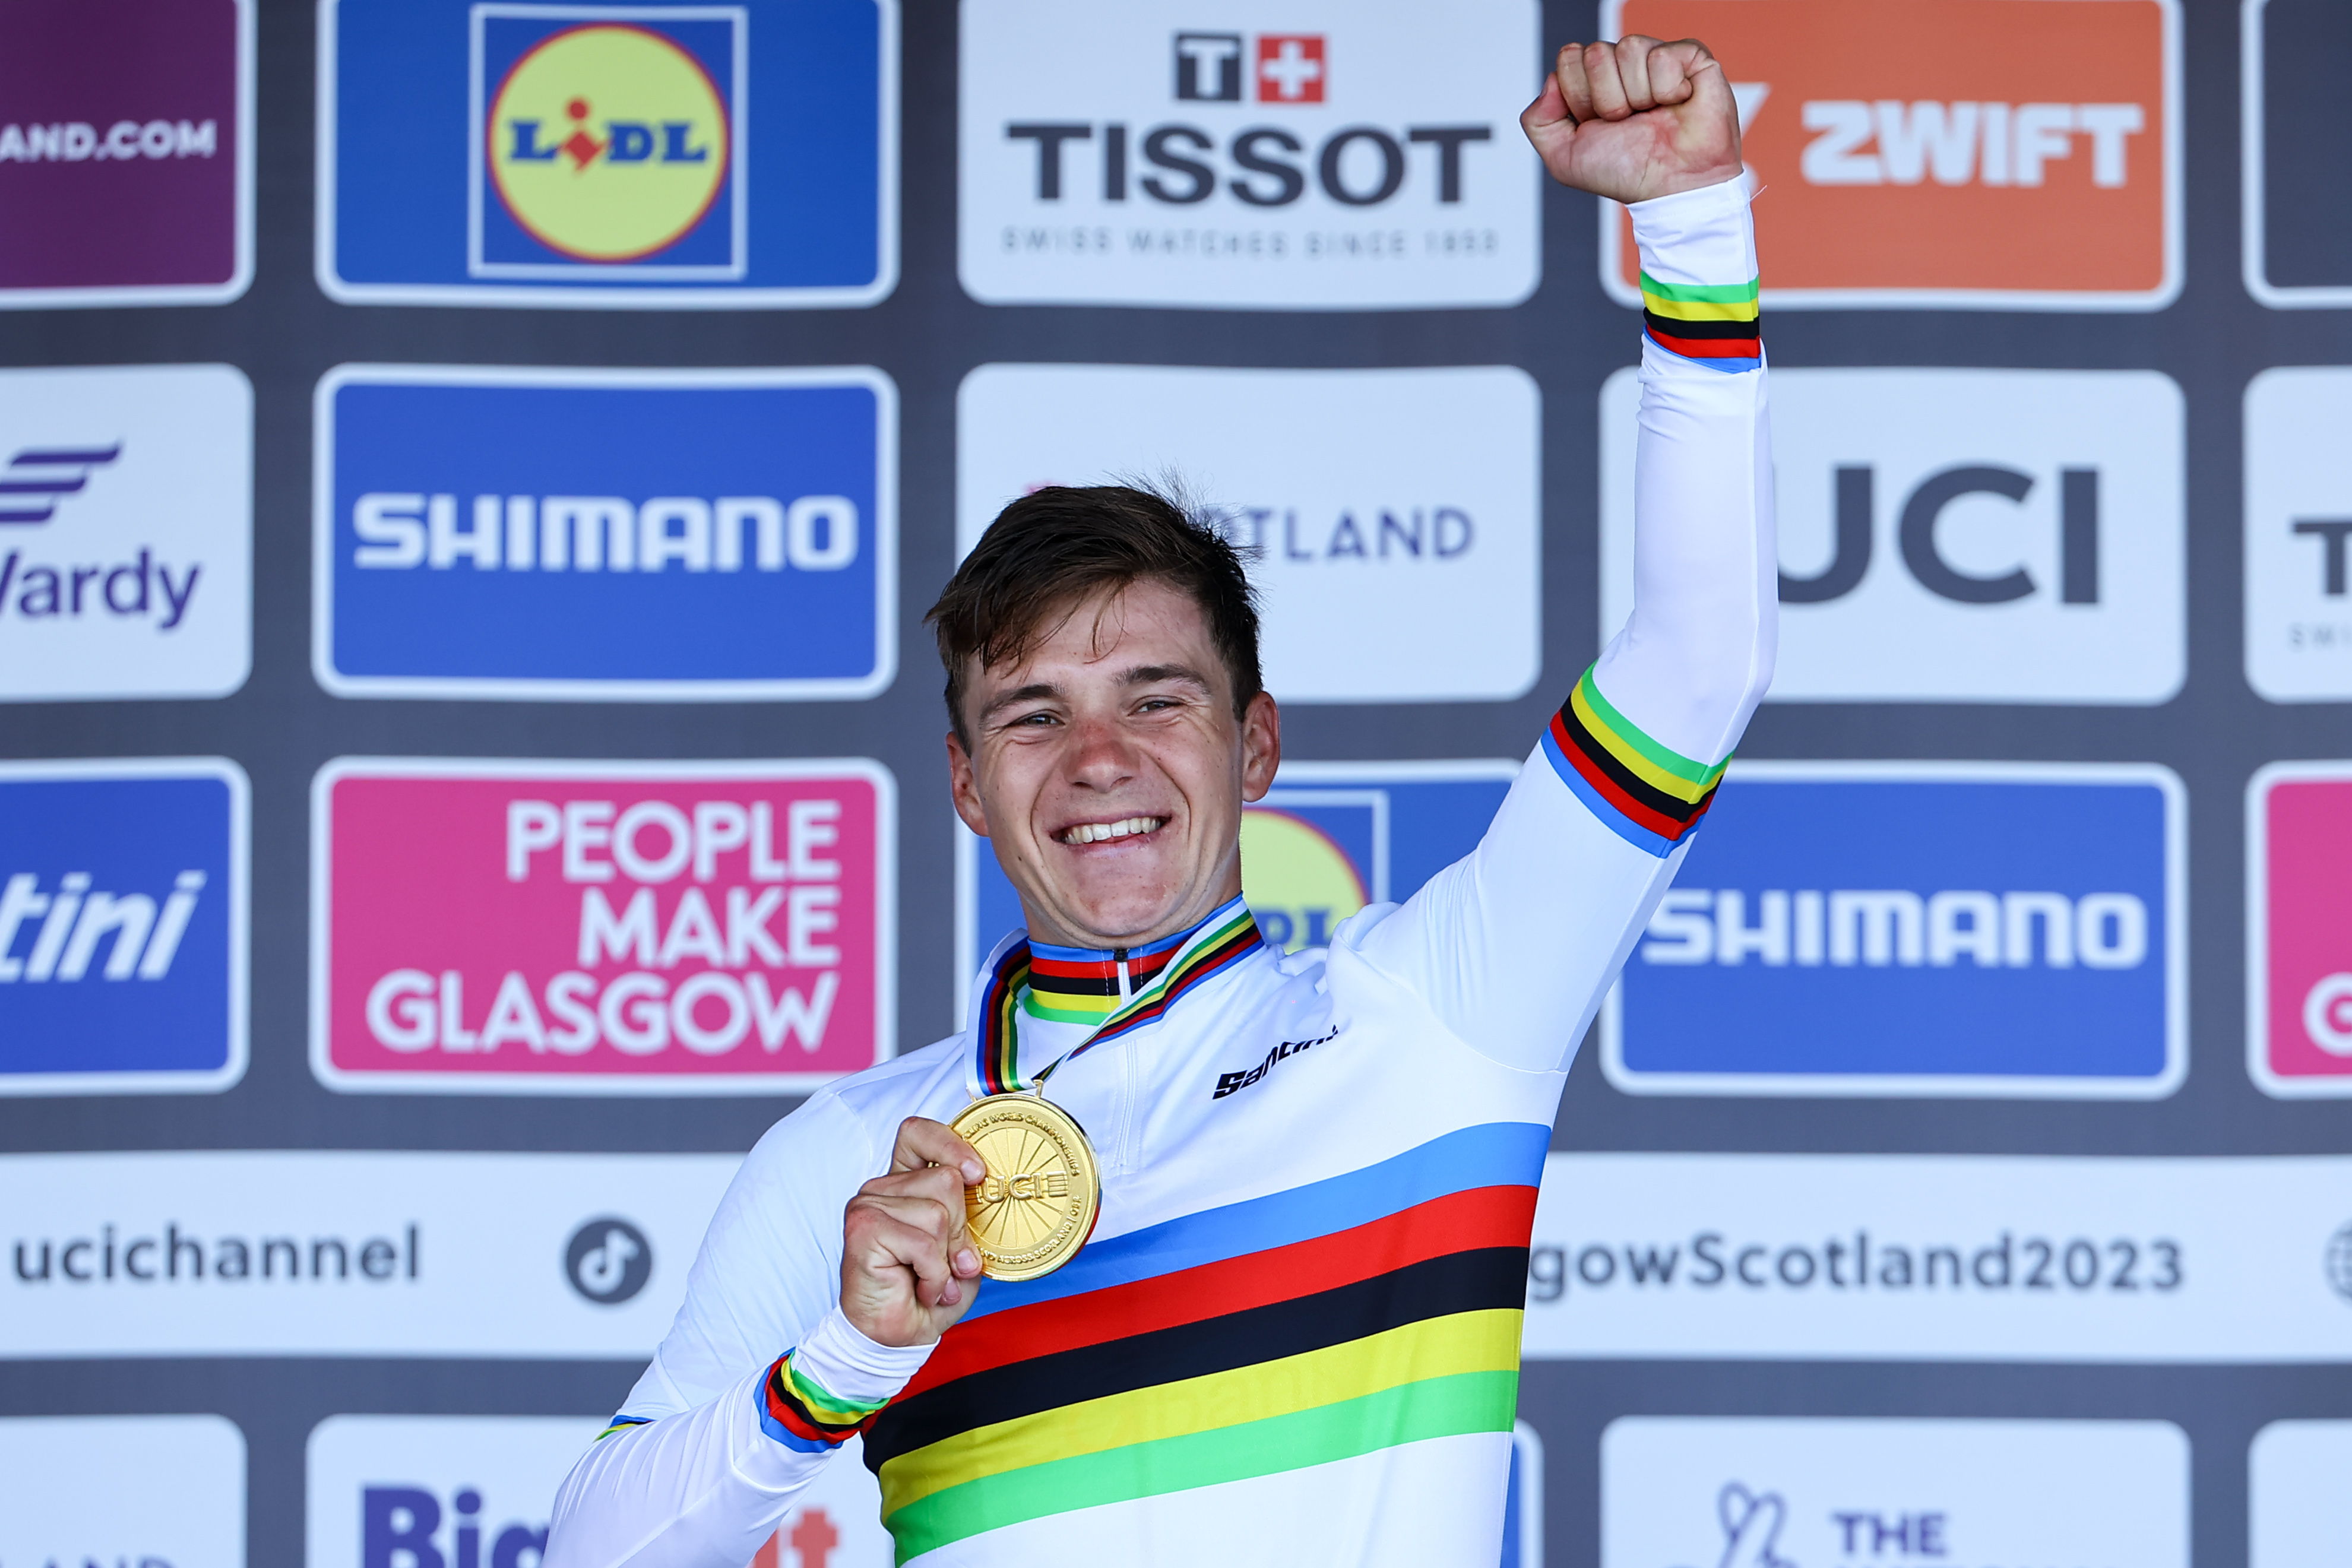 Remco Evenepoel with his gold medal in Glasgow. © BELGA PHOTO DAVID PINTENS